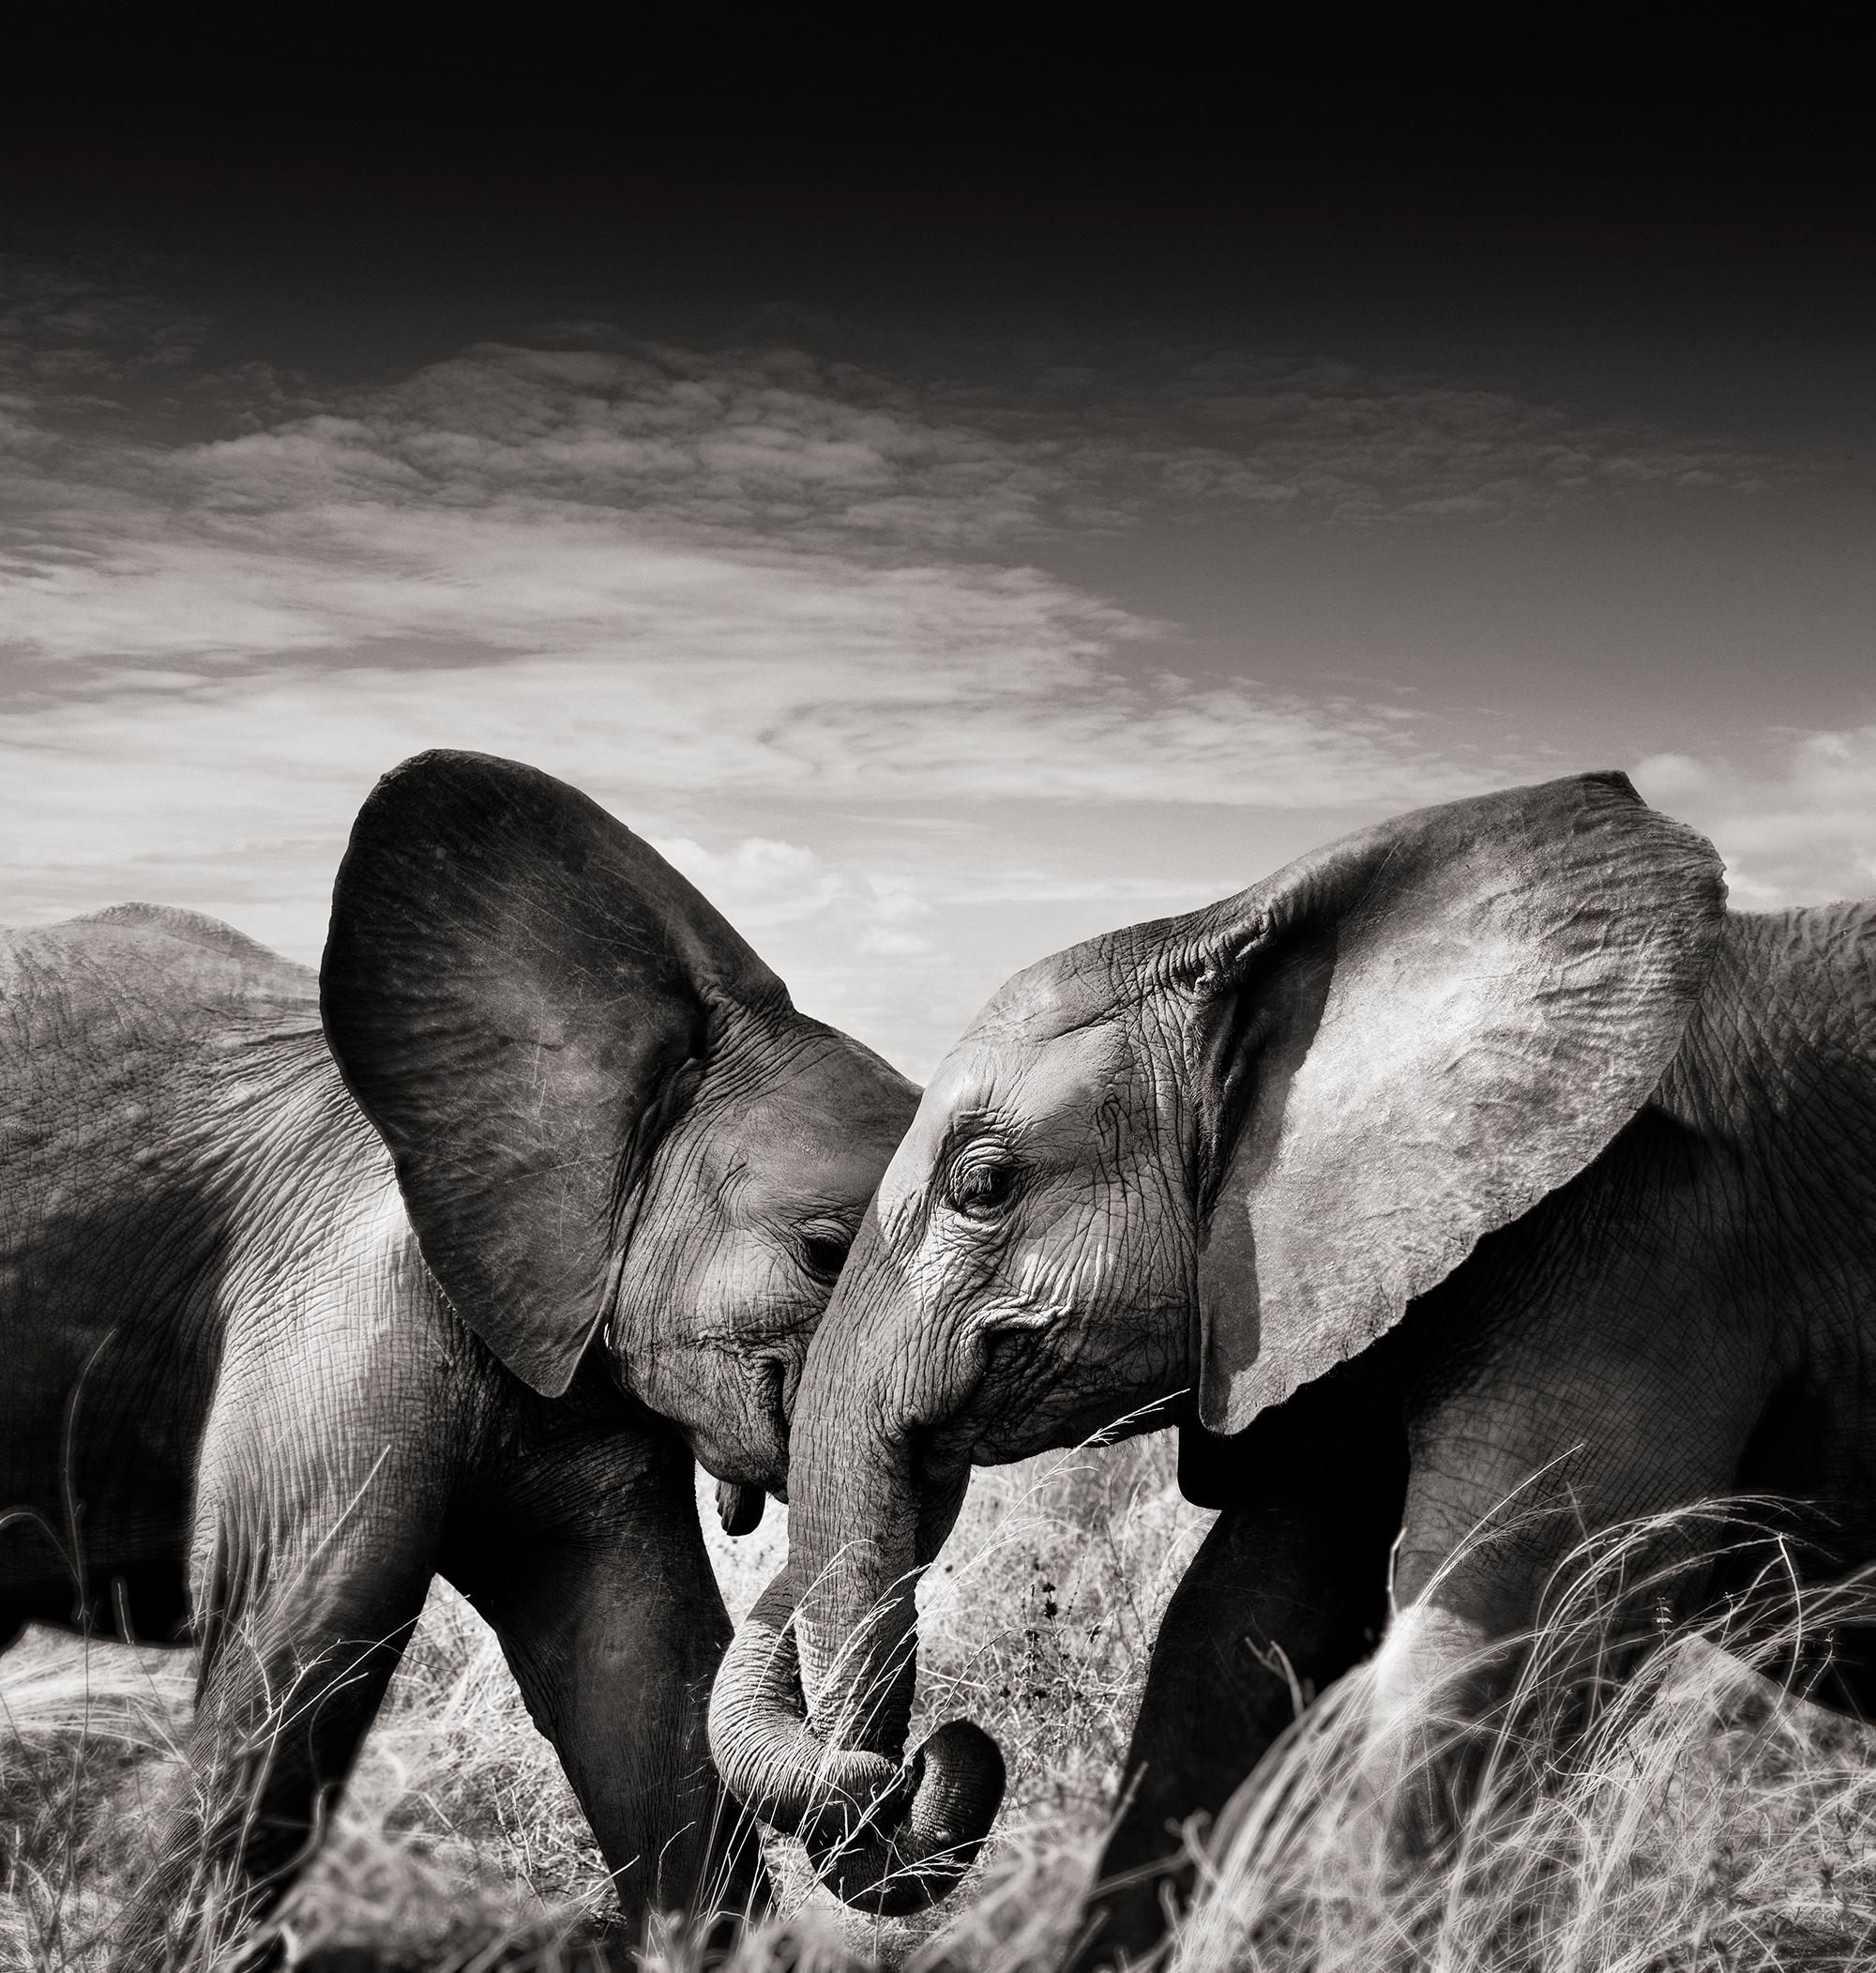 Joachim Schmeisser Landscape Photograph - Couple I, animal, wildlife, black and white photography, elephant, africa